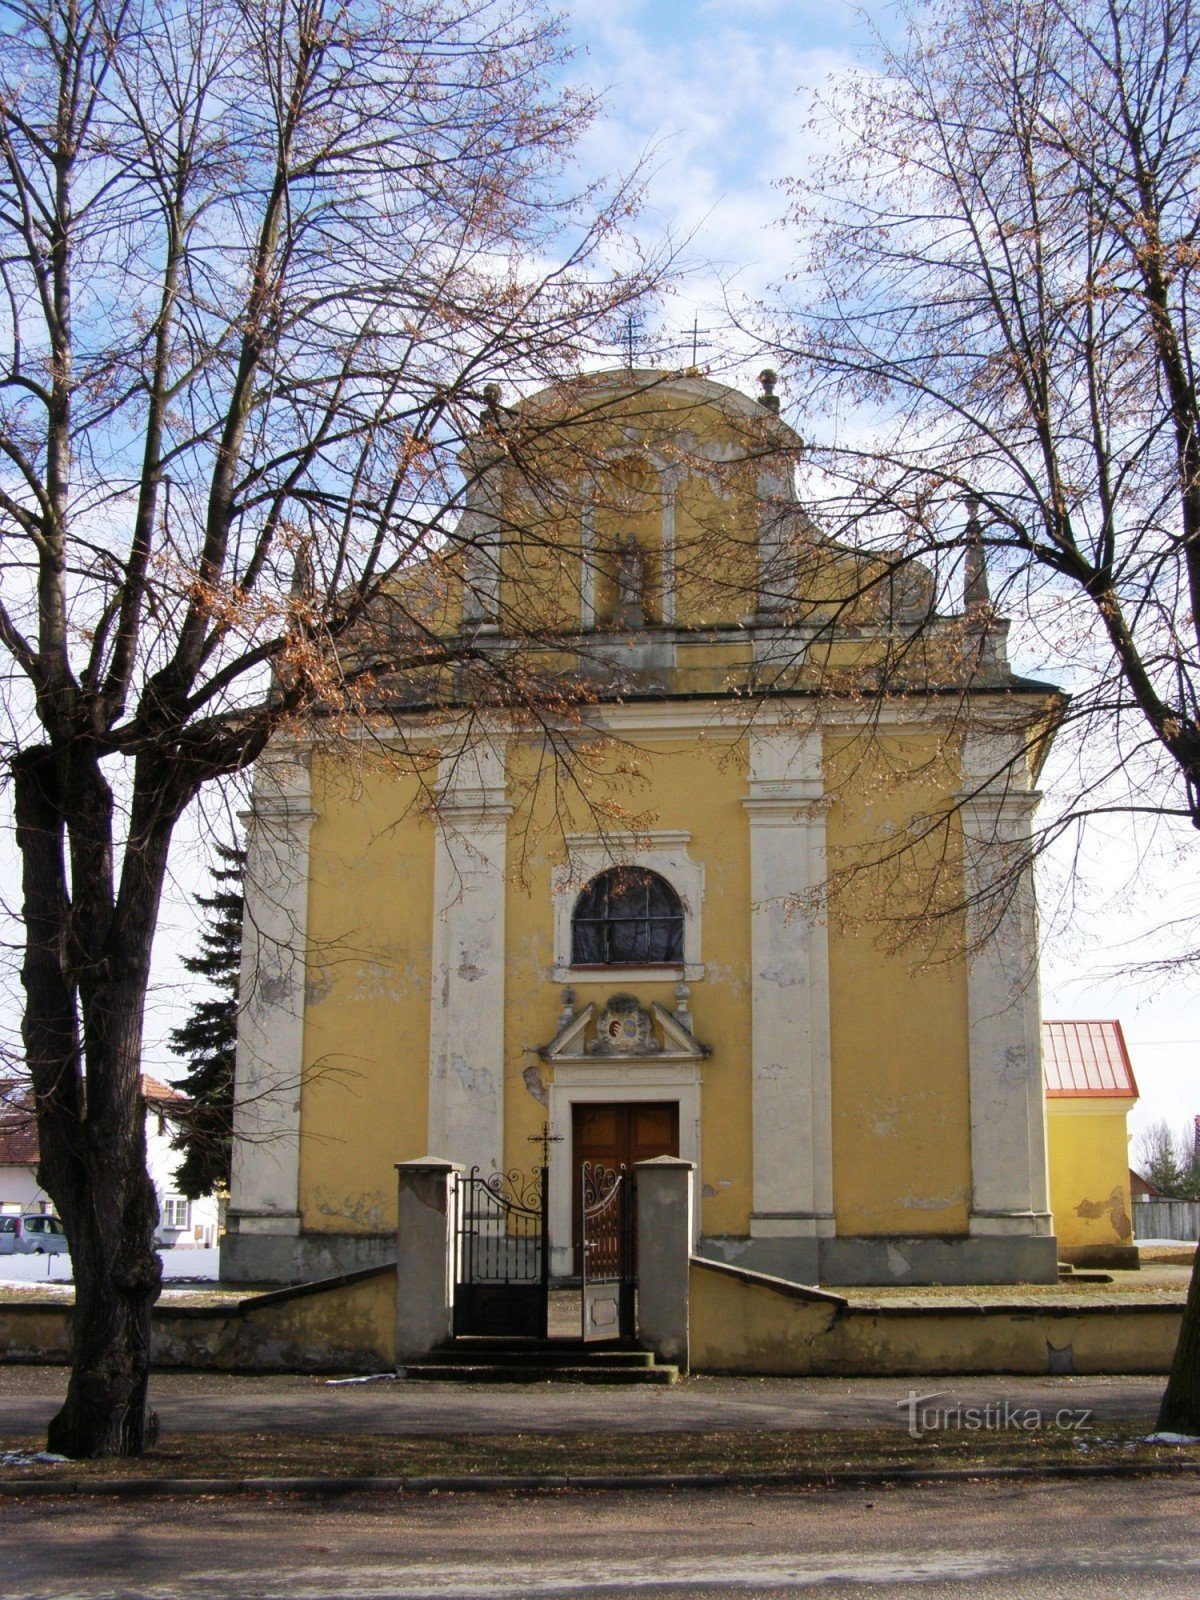 Lovčice - Kirche St. Bartholomäus mit dem Glockenturm